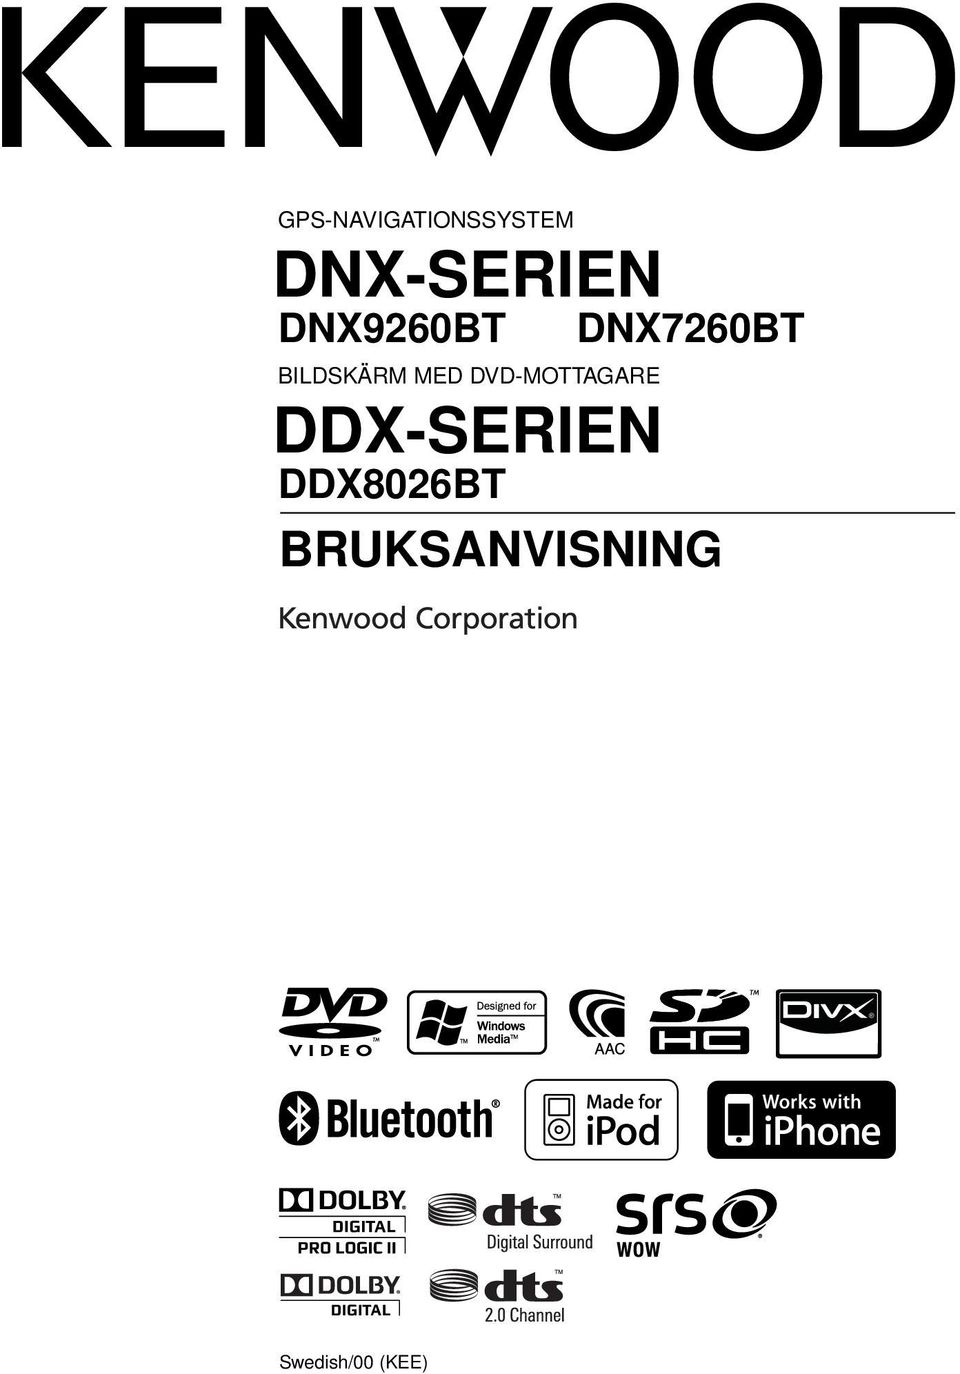 DVD-MOTTAGARE DDX-SERIEN